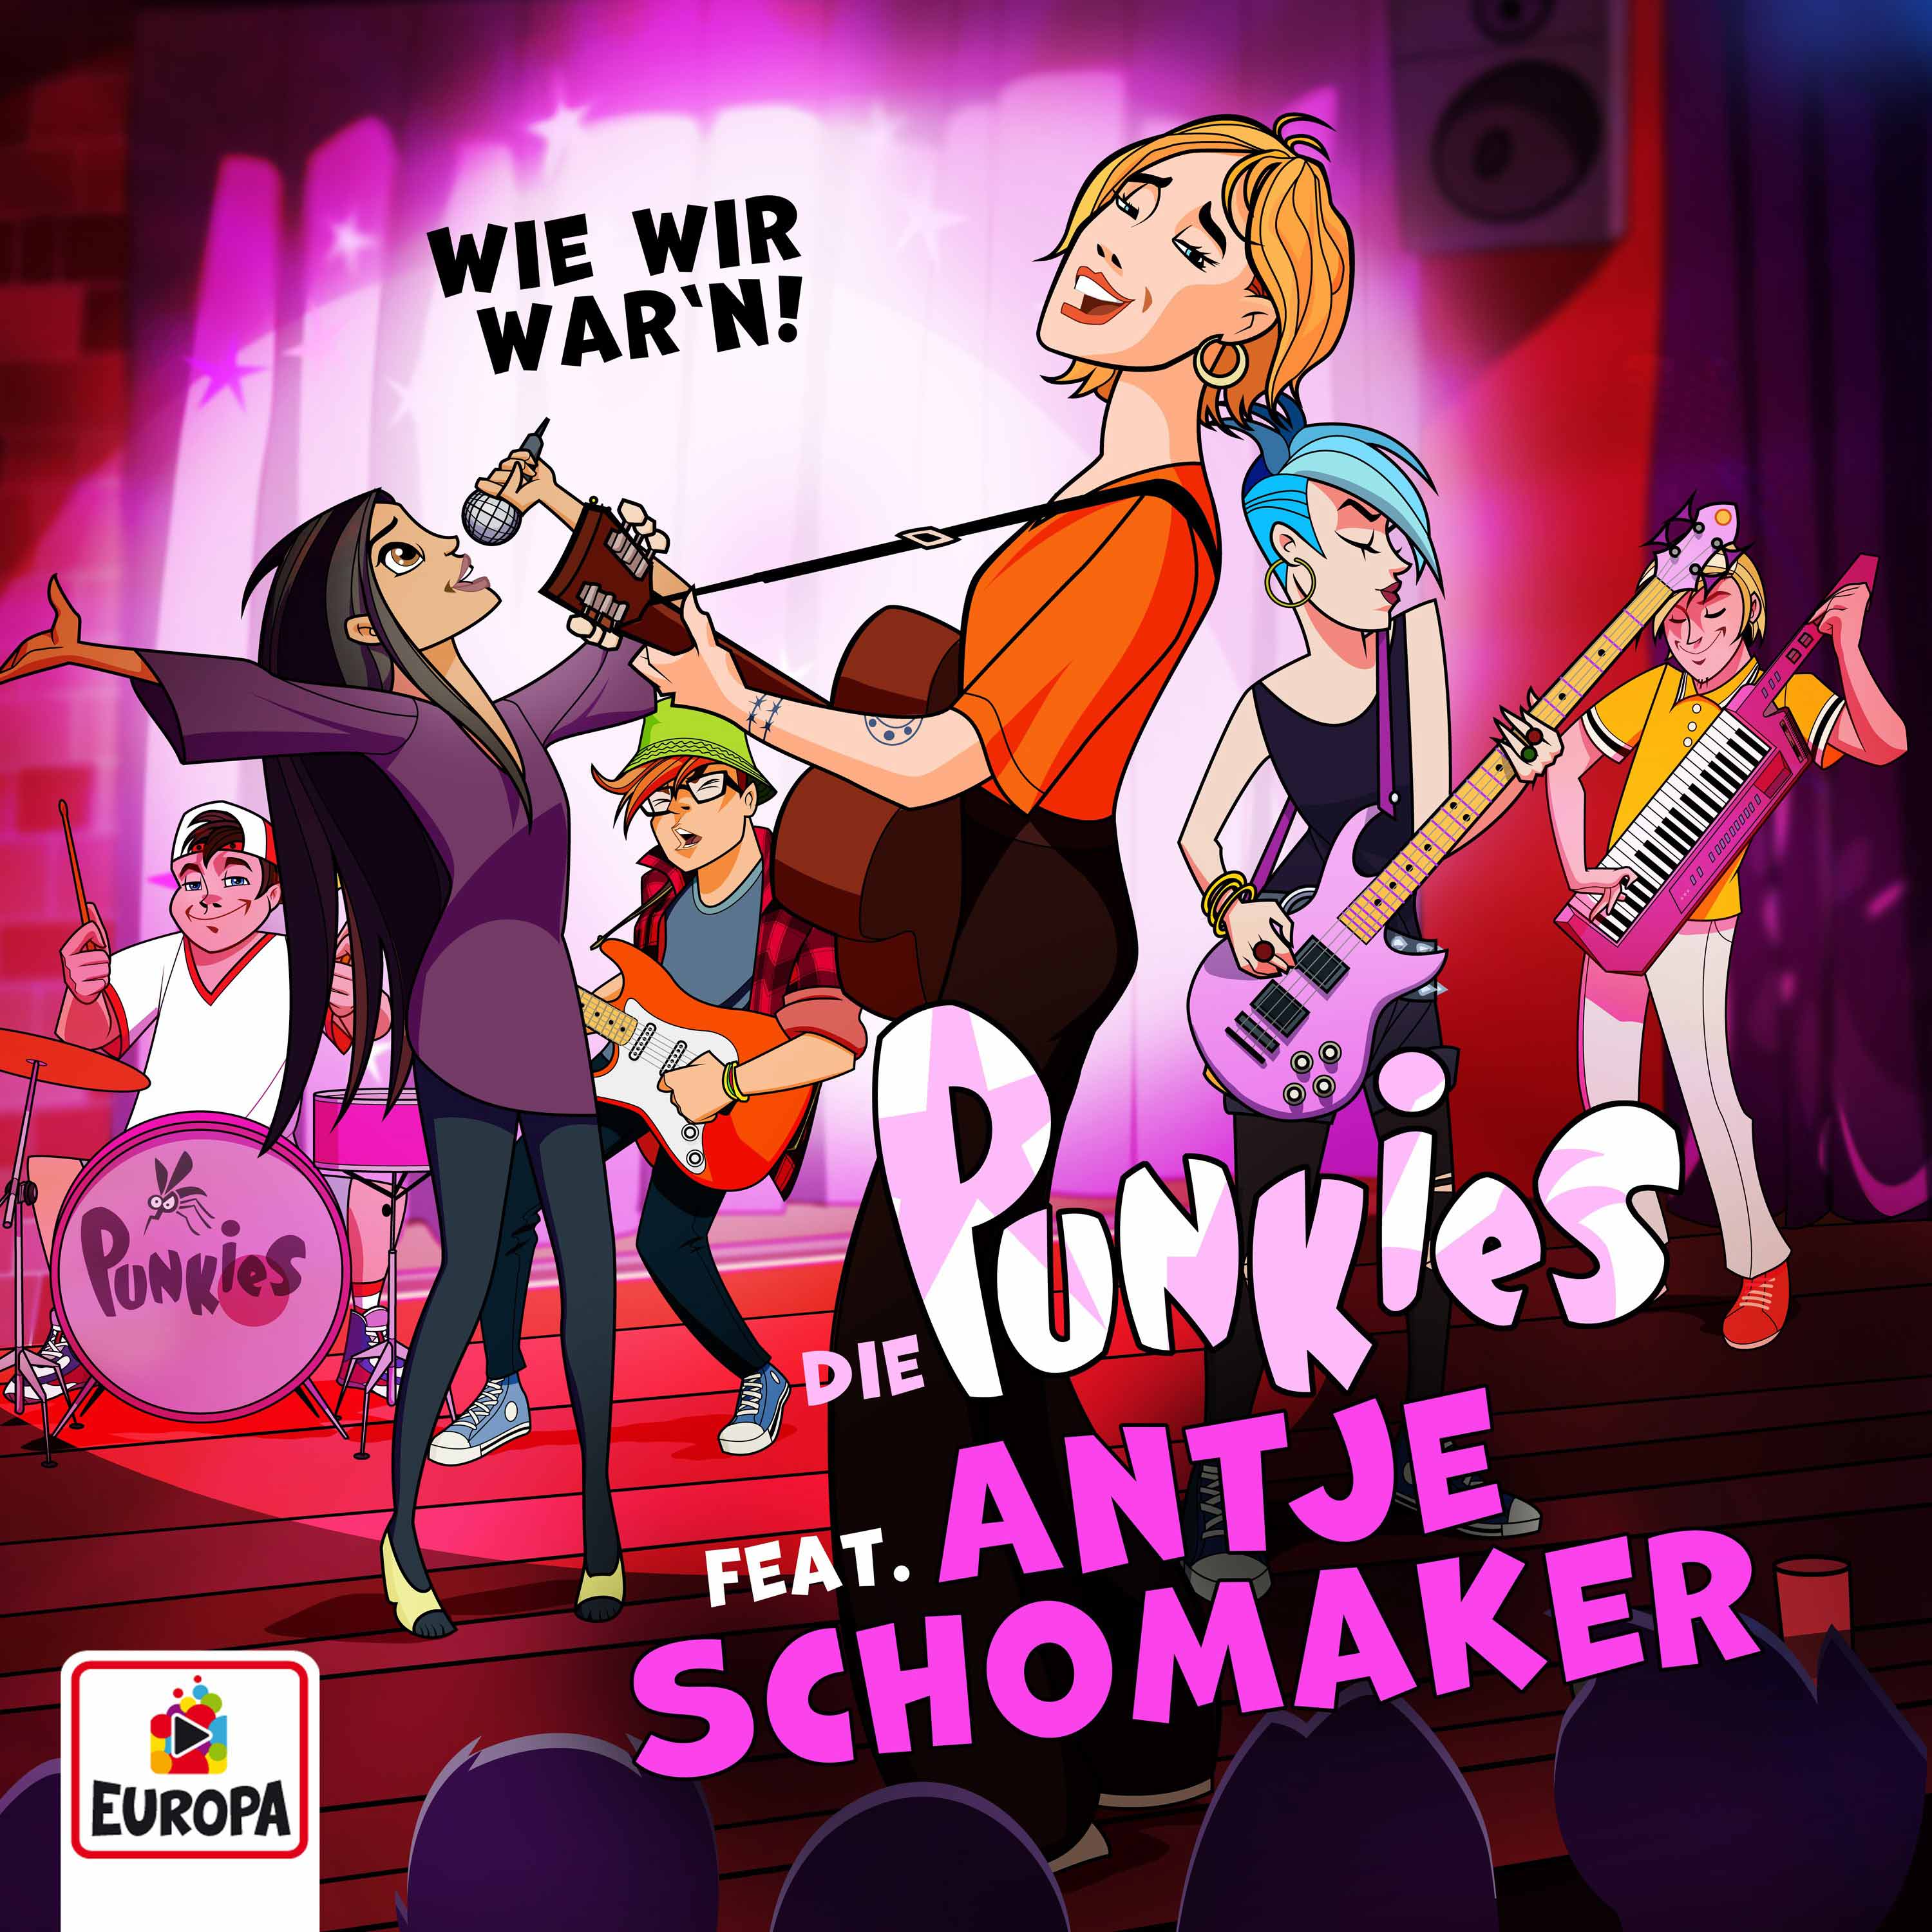 Die Punkies  - Wie wir war'n (feat. Antje Schomaker)